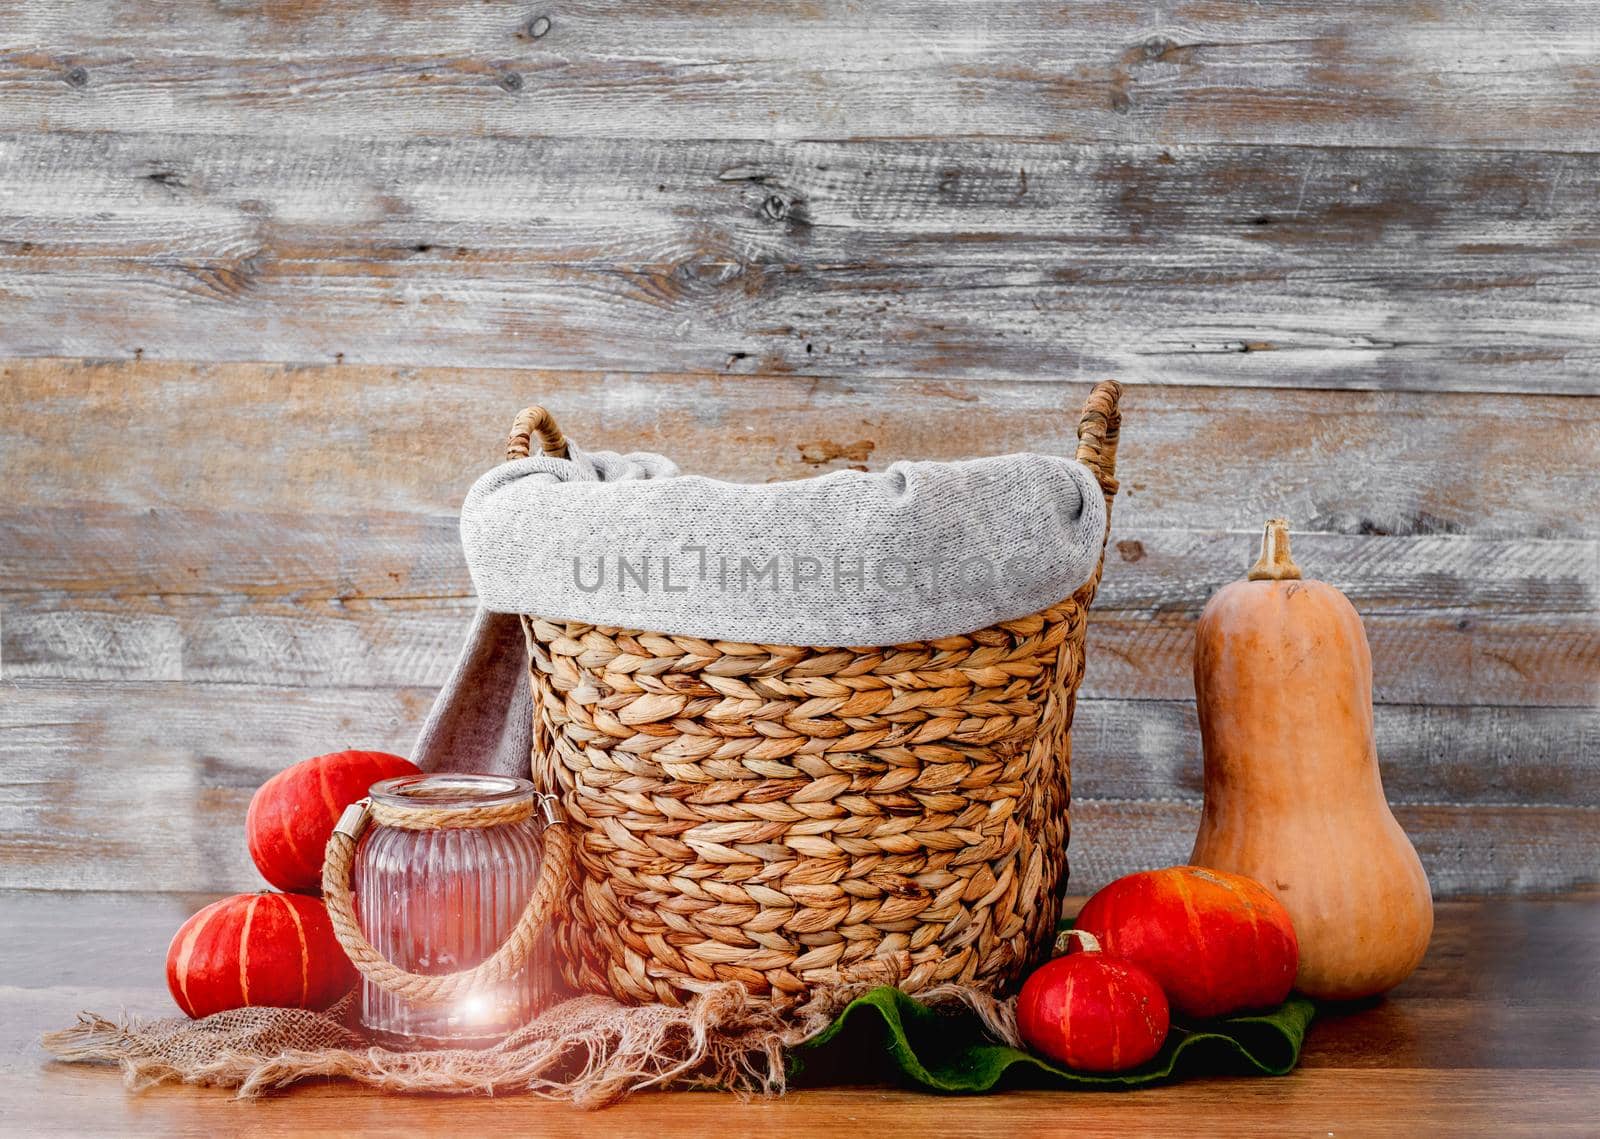 Stylized basket for newborn baby photoshoot with autumn veggies pampkin decor on wooden background. Studio handmade scene for infant child halloween photos